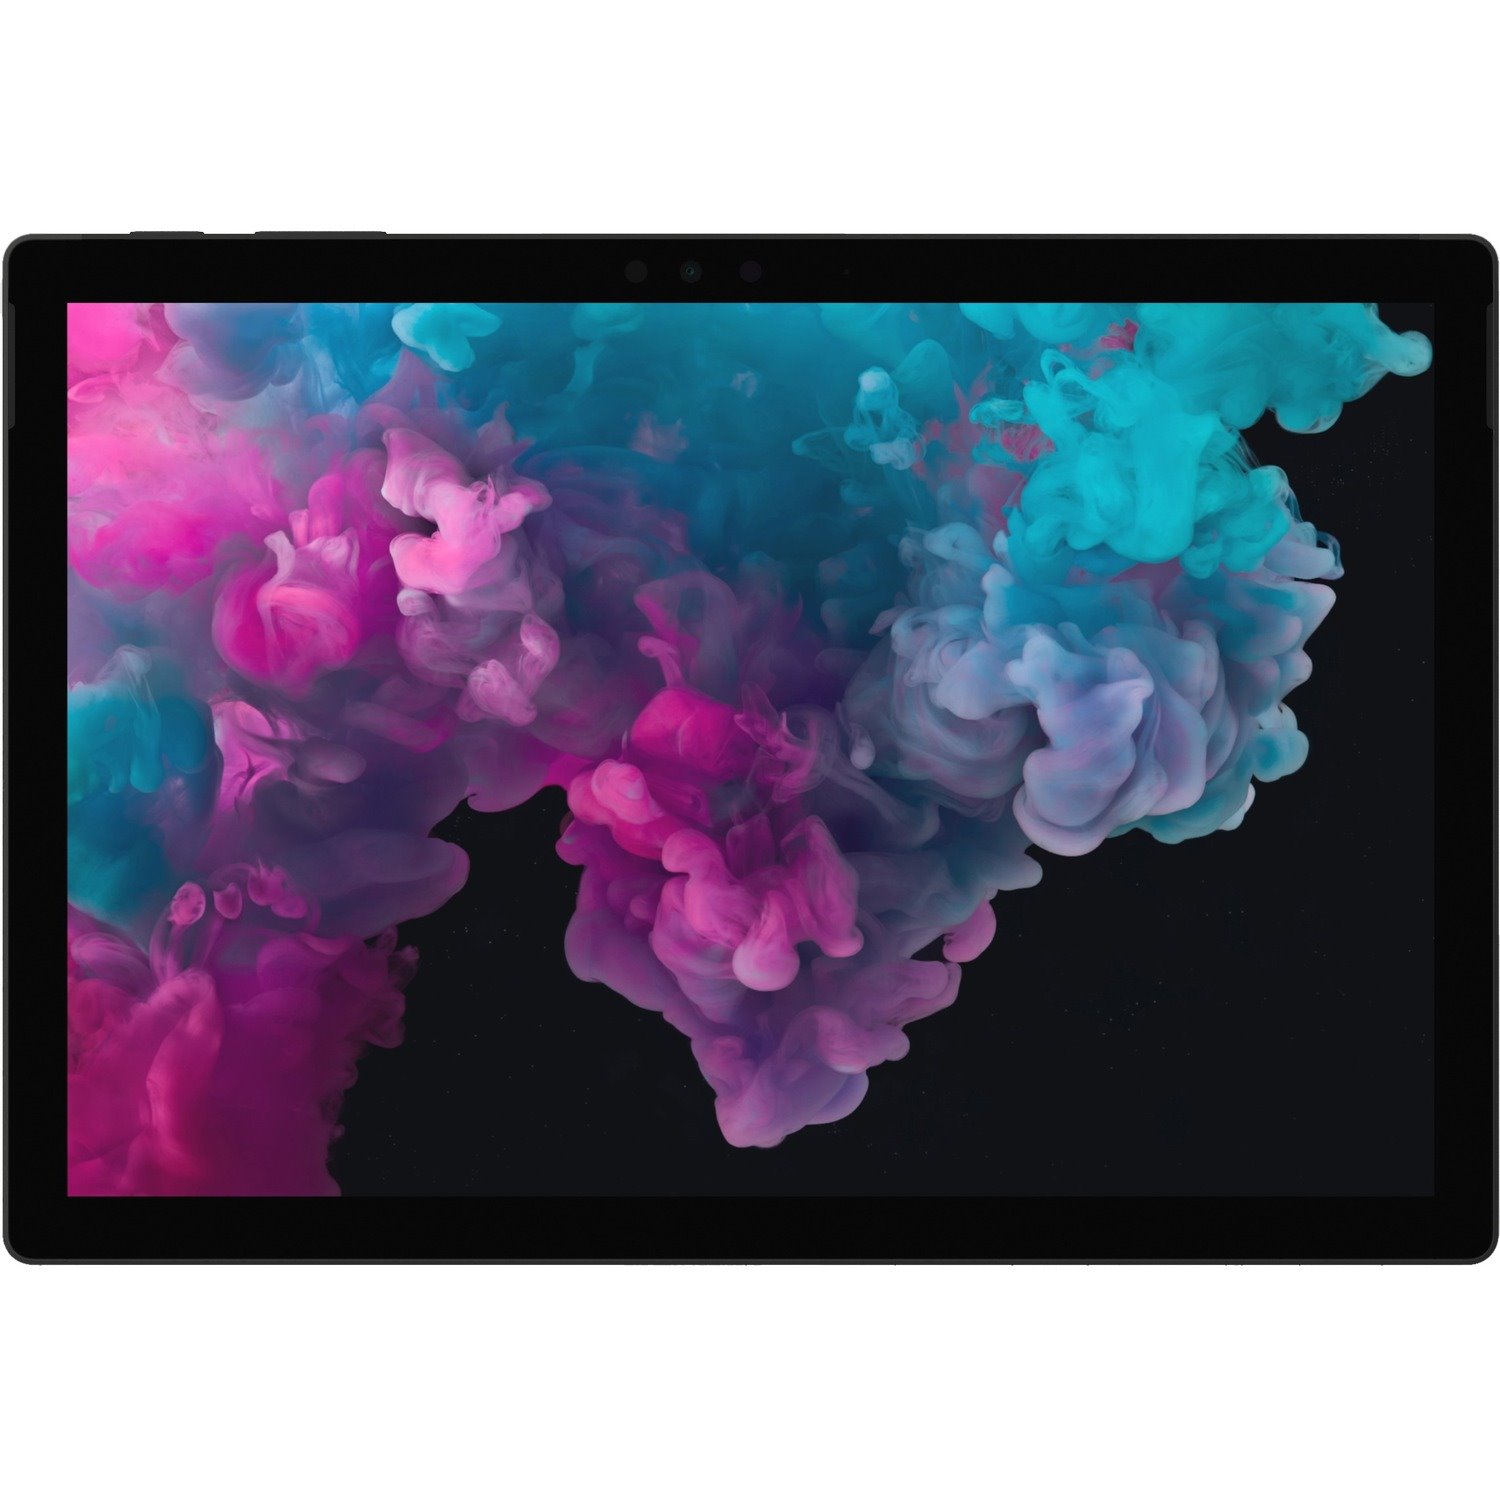 Microsoft Surface Pro 6 Tablet - 12.3" - 8 GB - 256 GB SSD - Windows 10 Pro - Black